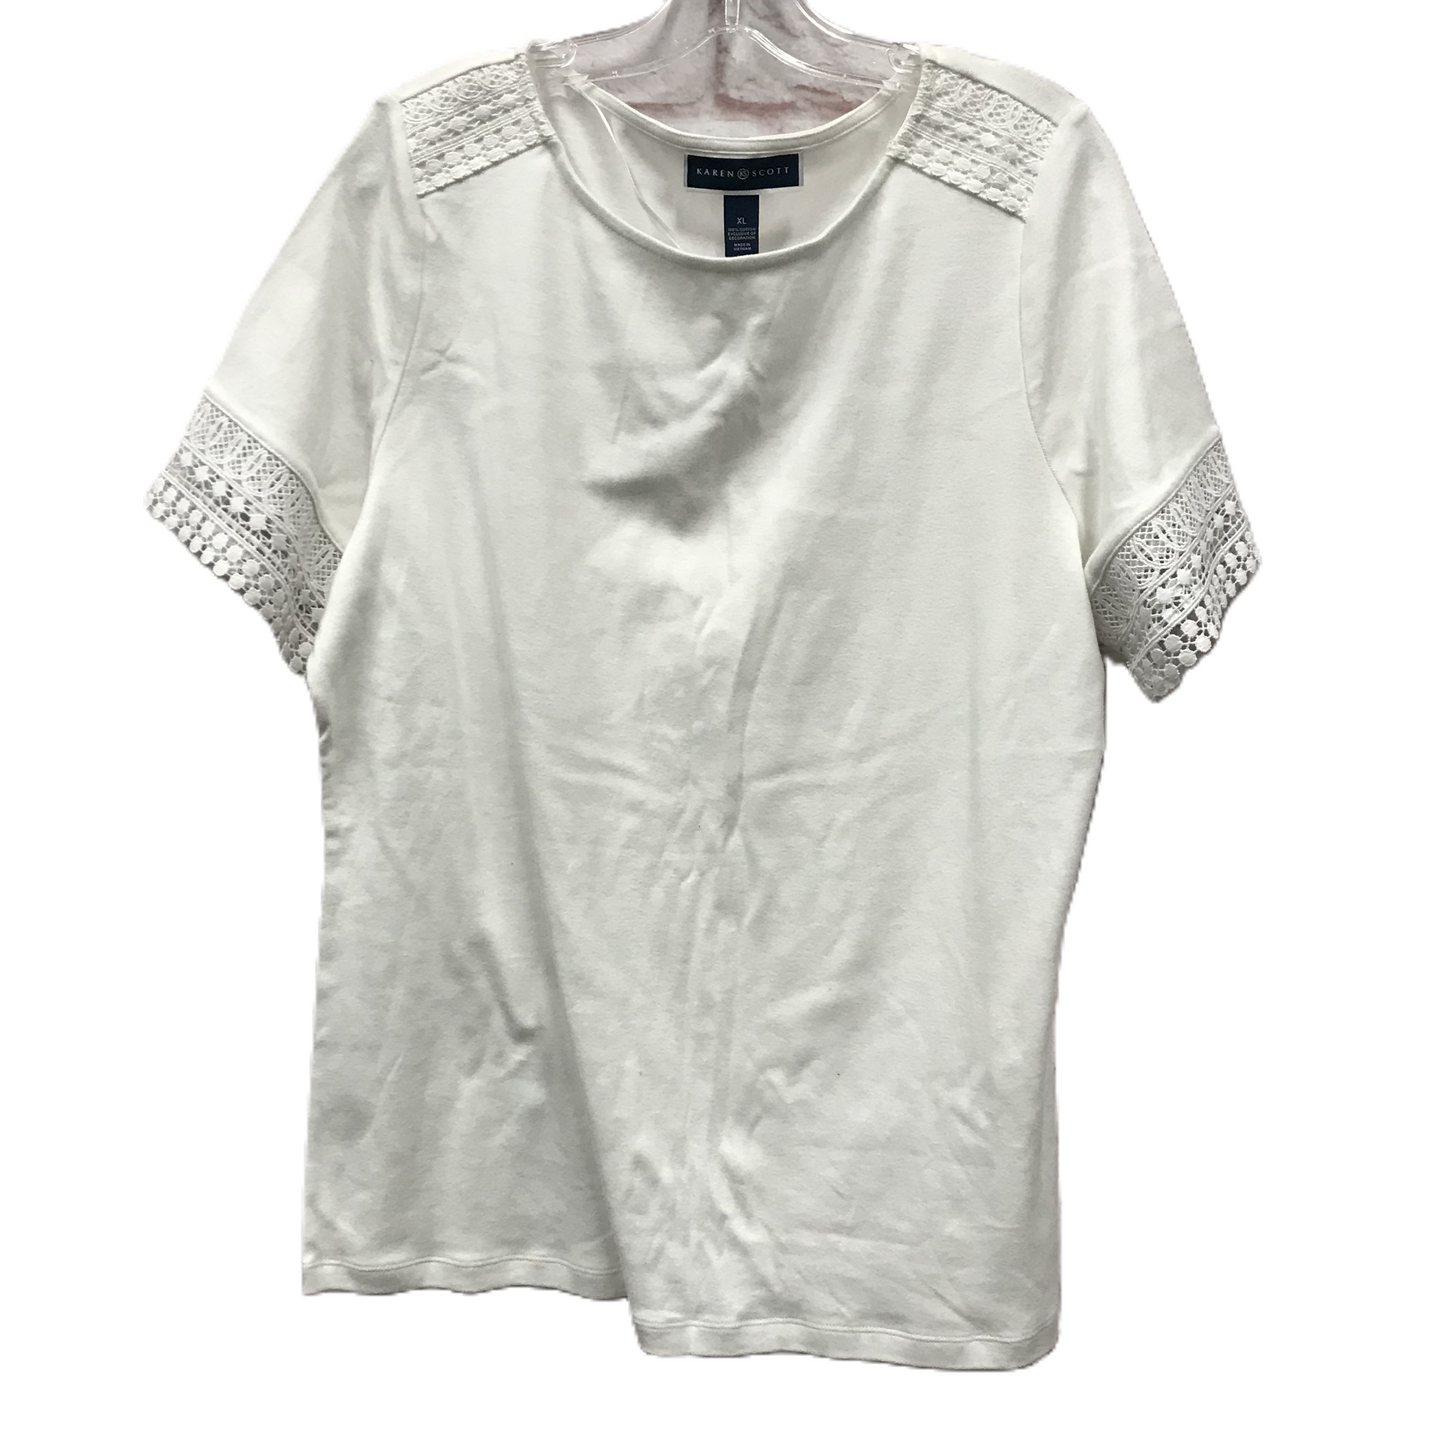 White Top Short Sleeve By Karen Scott, Size: Xl